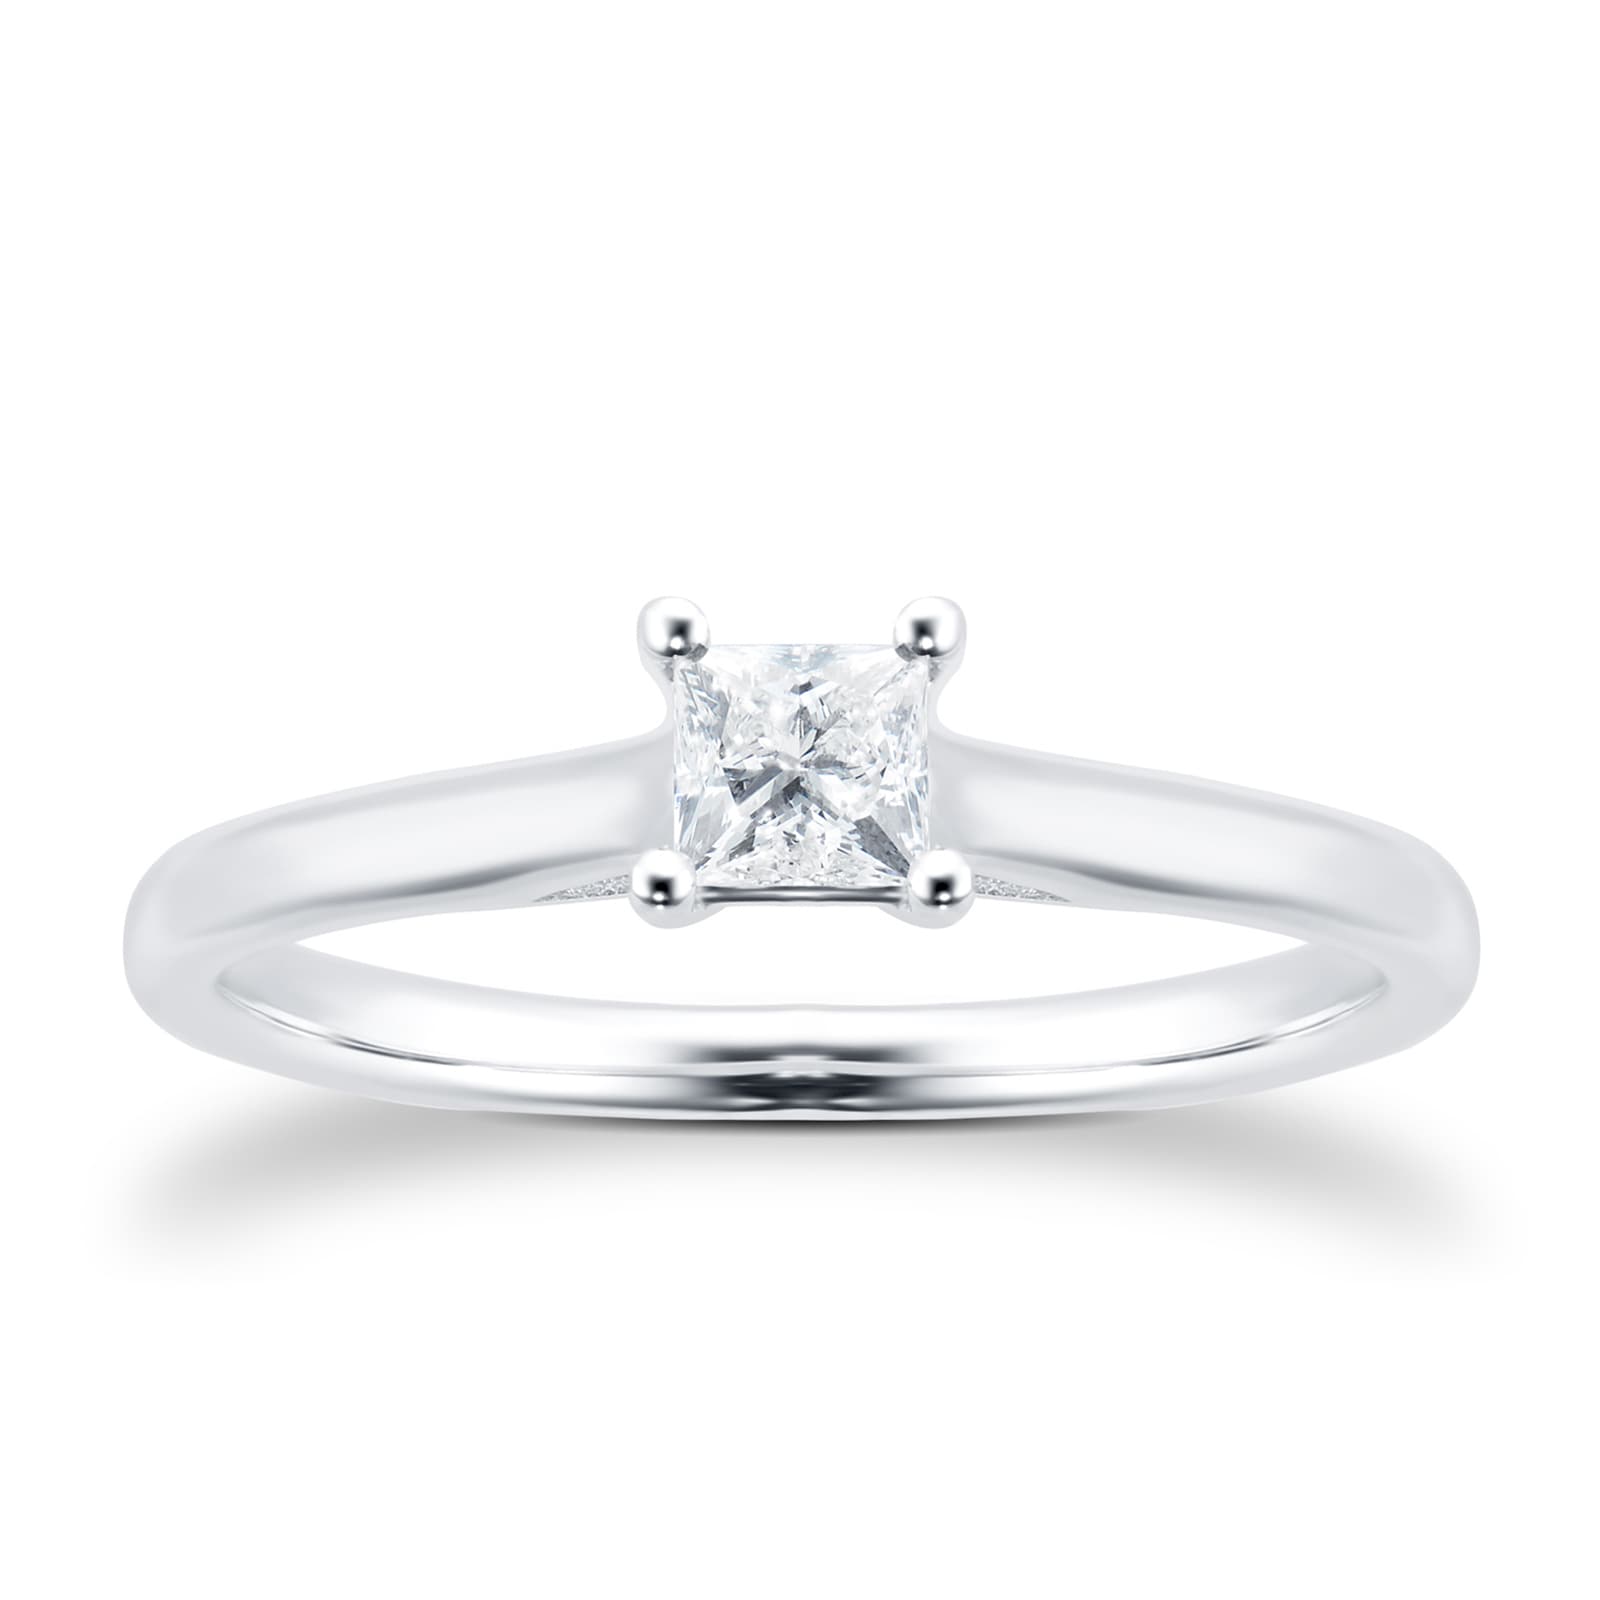 18ct White Gold 0.25ct Princess Cut Diamond Engagement Ring - Ring Size O